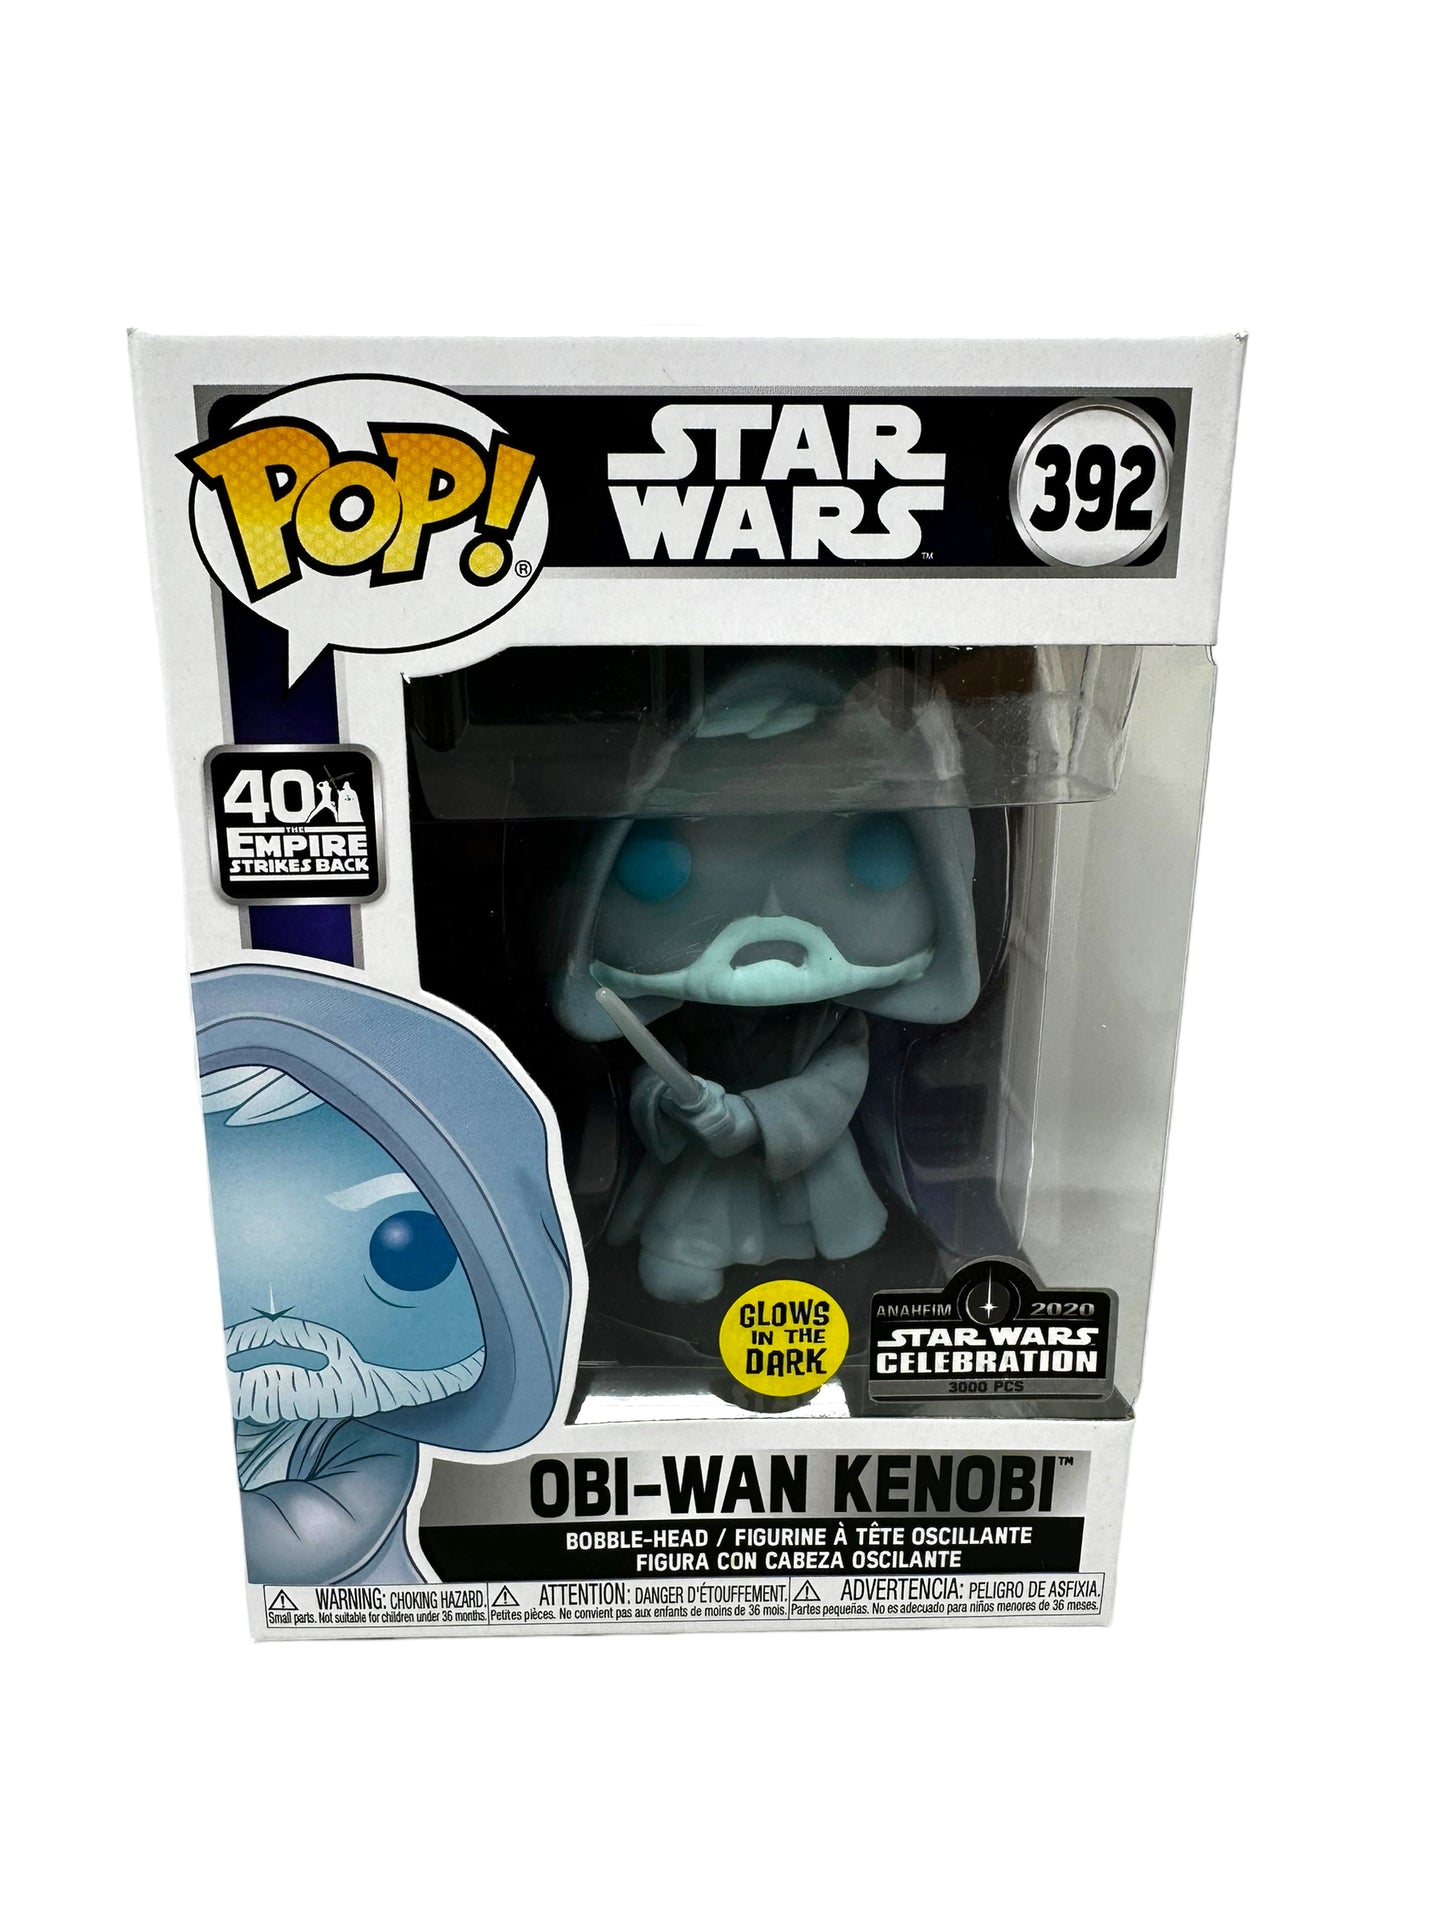 Sold 10/7 2020 Star Wars Celebrations Obi-Wan Kenobi GITD (holo) LE 3000